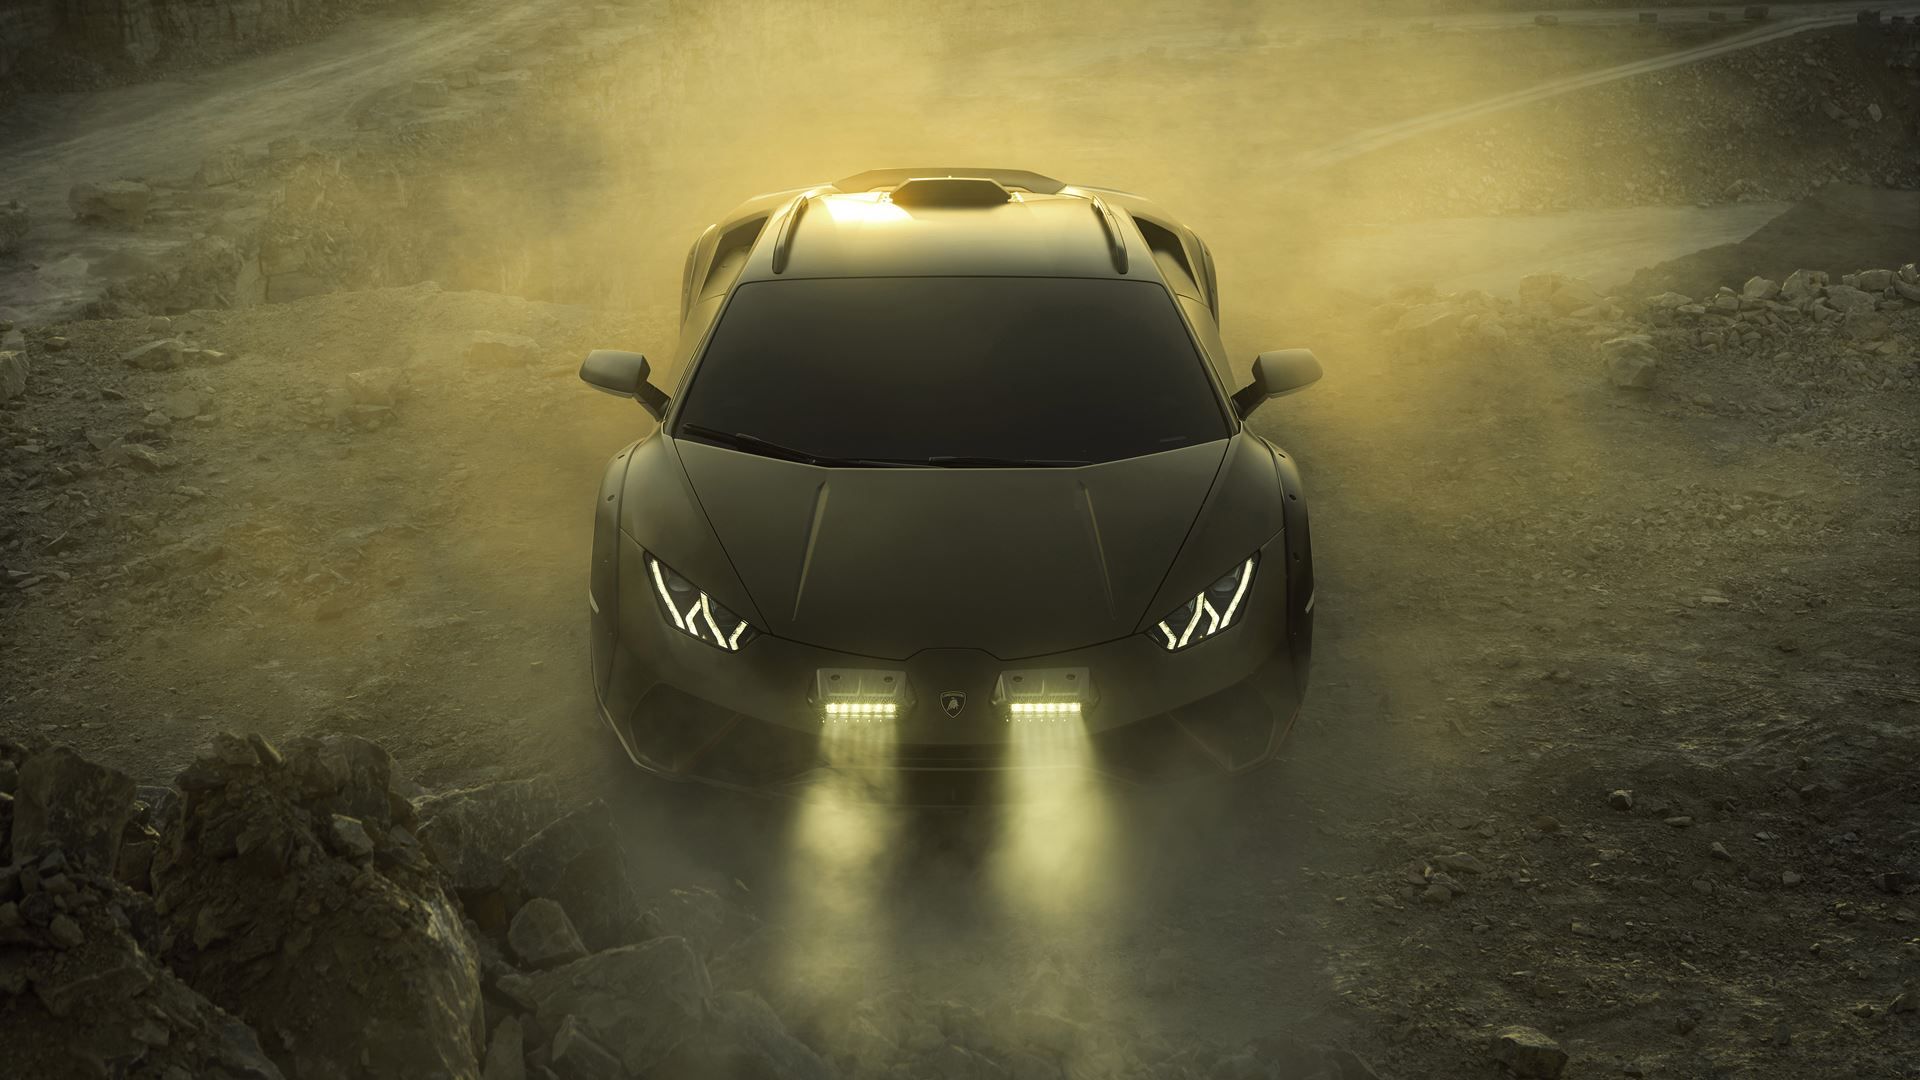 Green 2023 Lamborghini Huracan Sterrato In The Dust